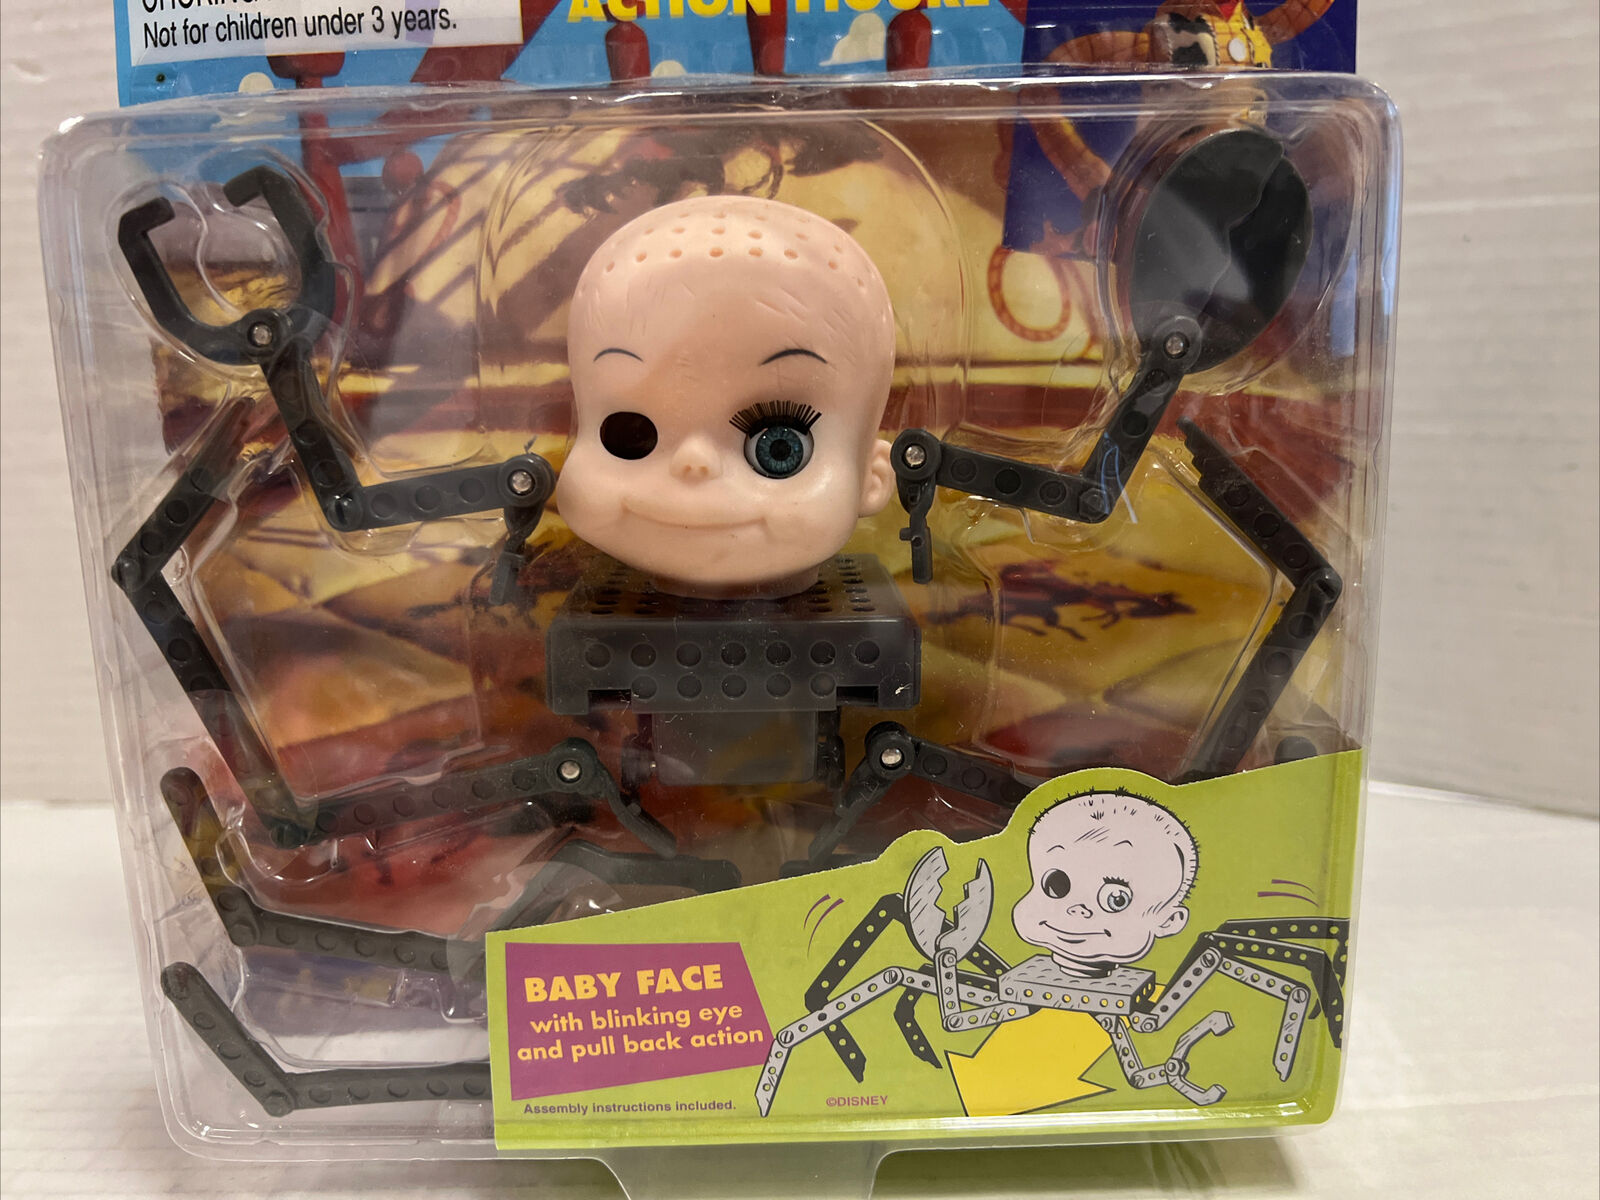 Disney Toy Story BABY FACE Action Figure NEW SEALED Thinkway Blinking Eye